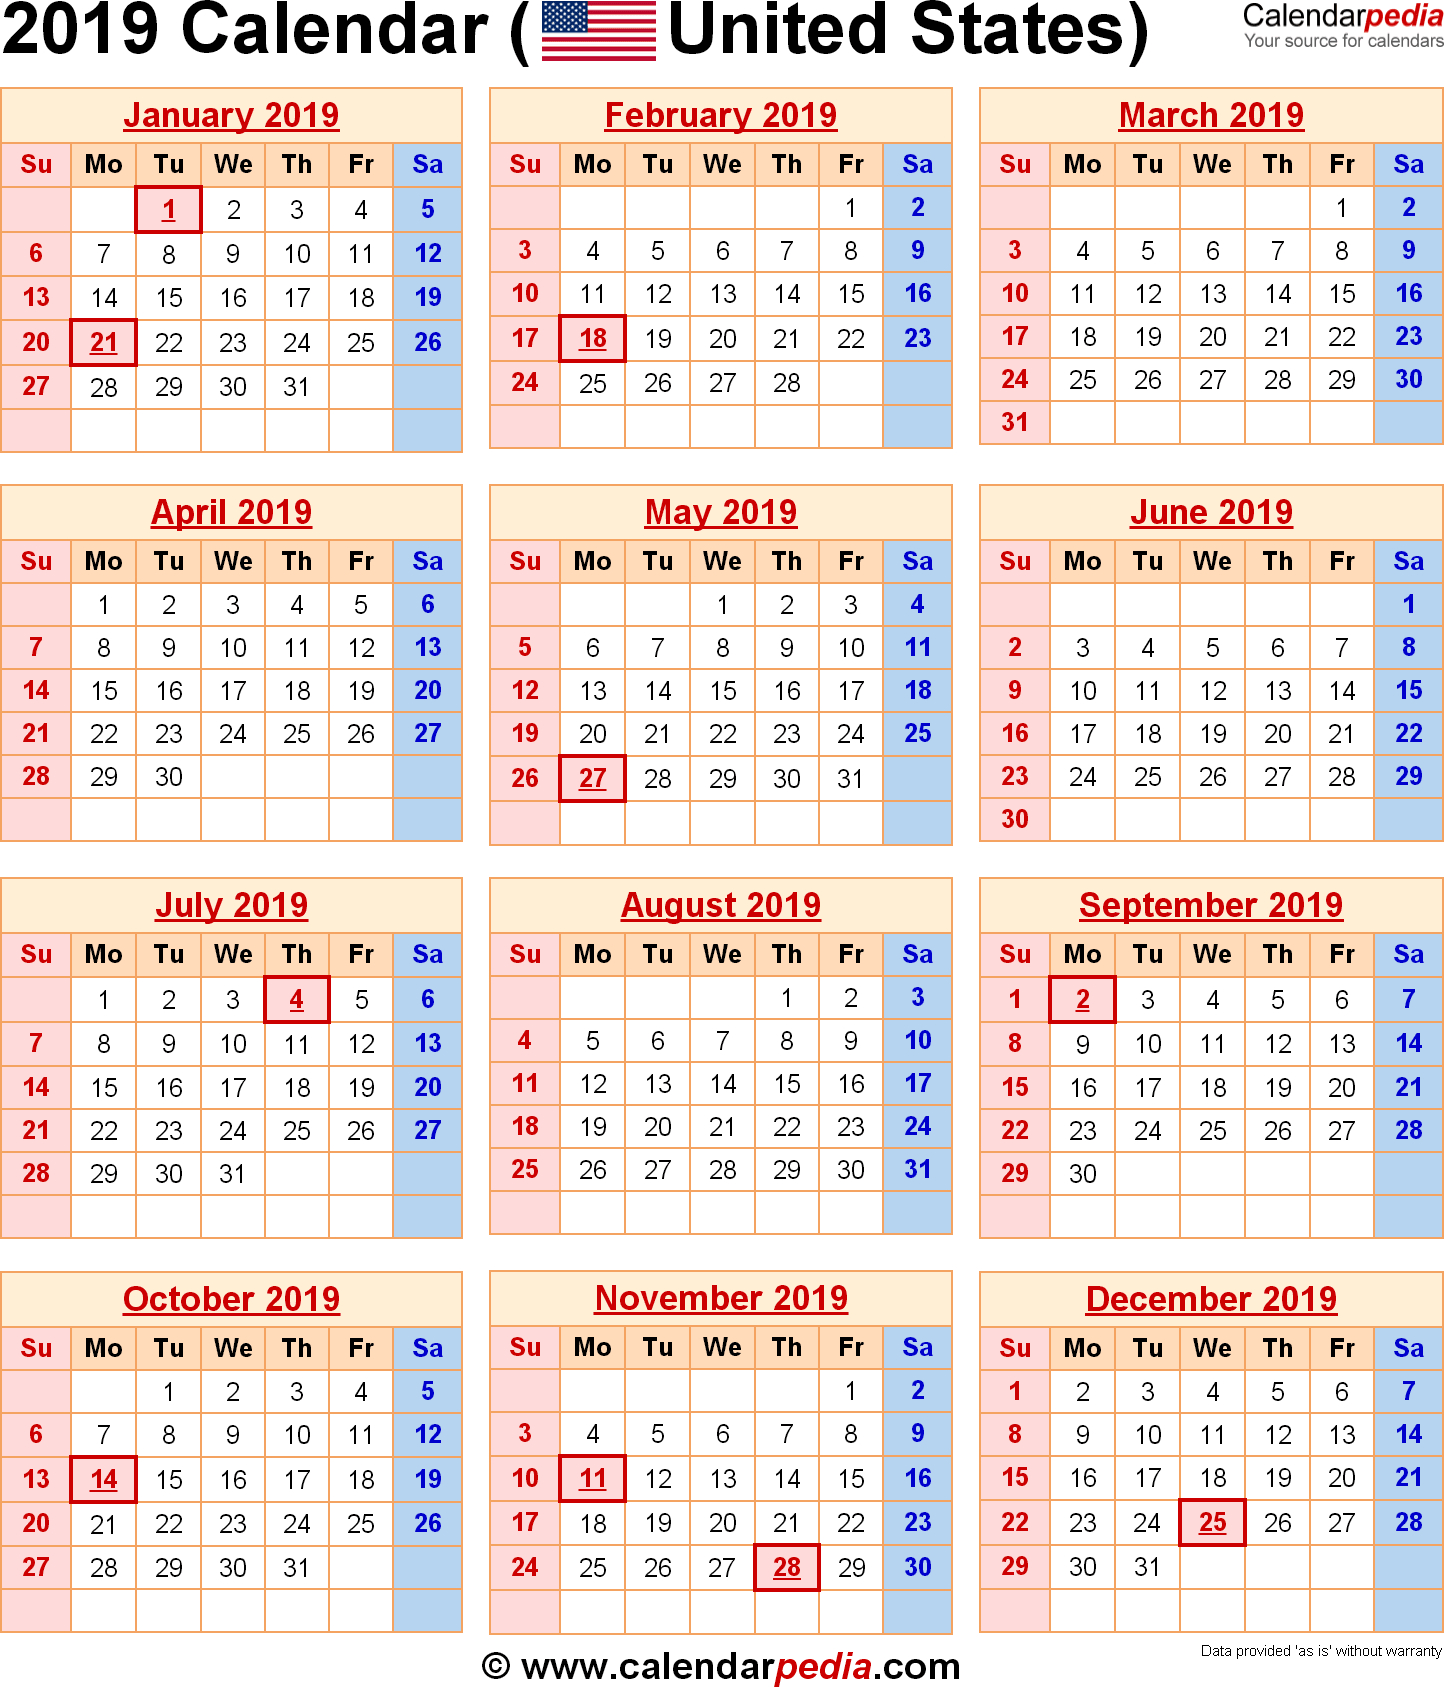 2019 Calendar With Federal Holidays